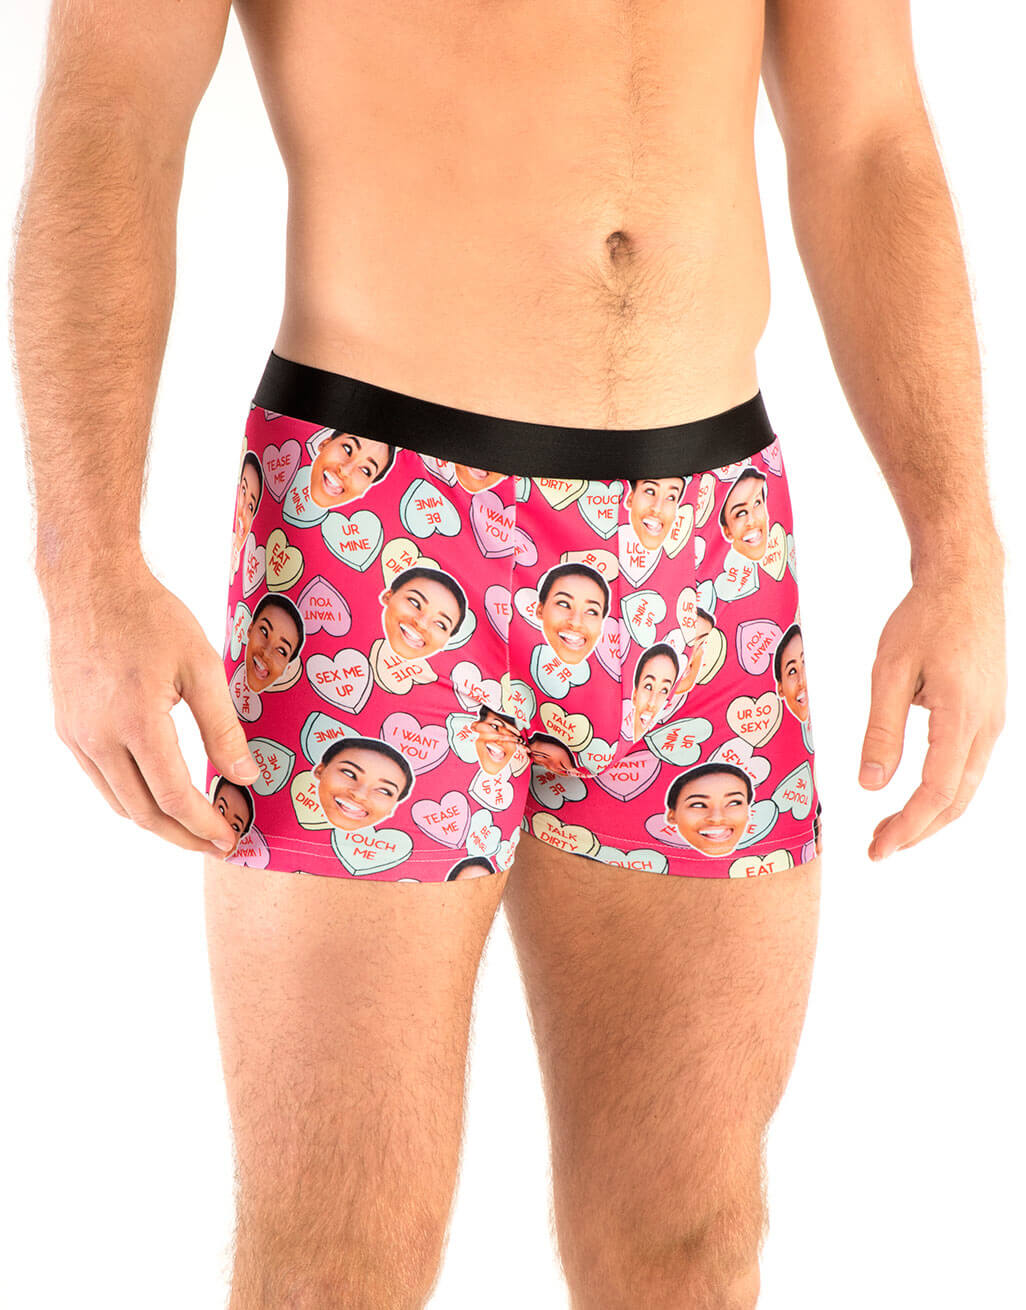 Smiley Face Dirty Boxers Men's Underwear 